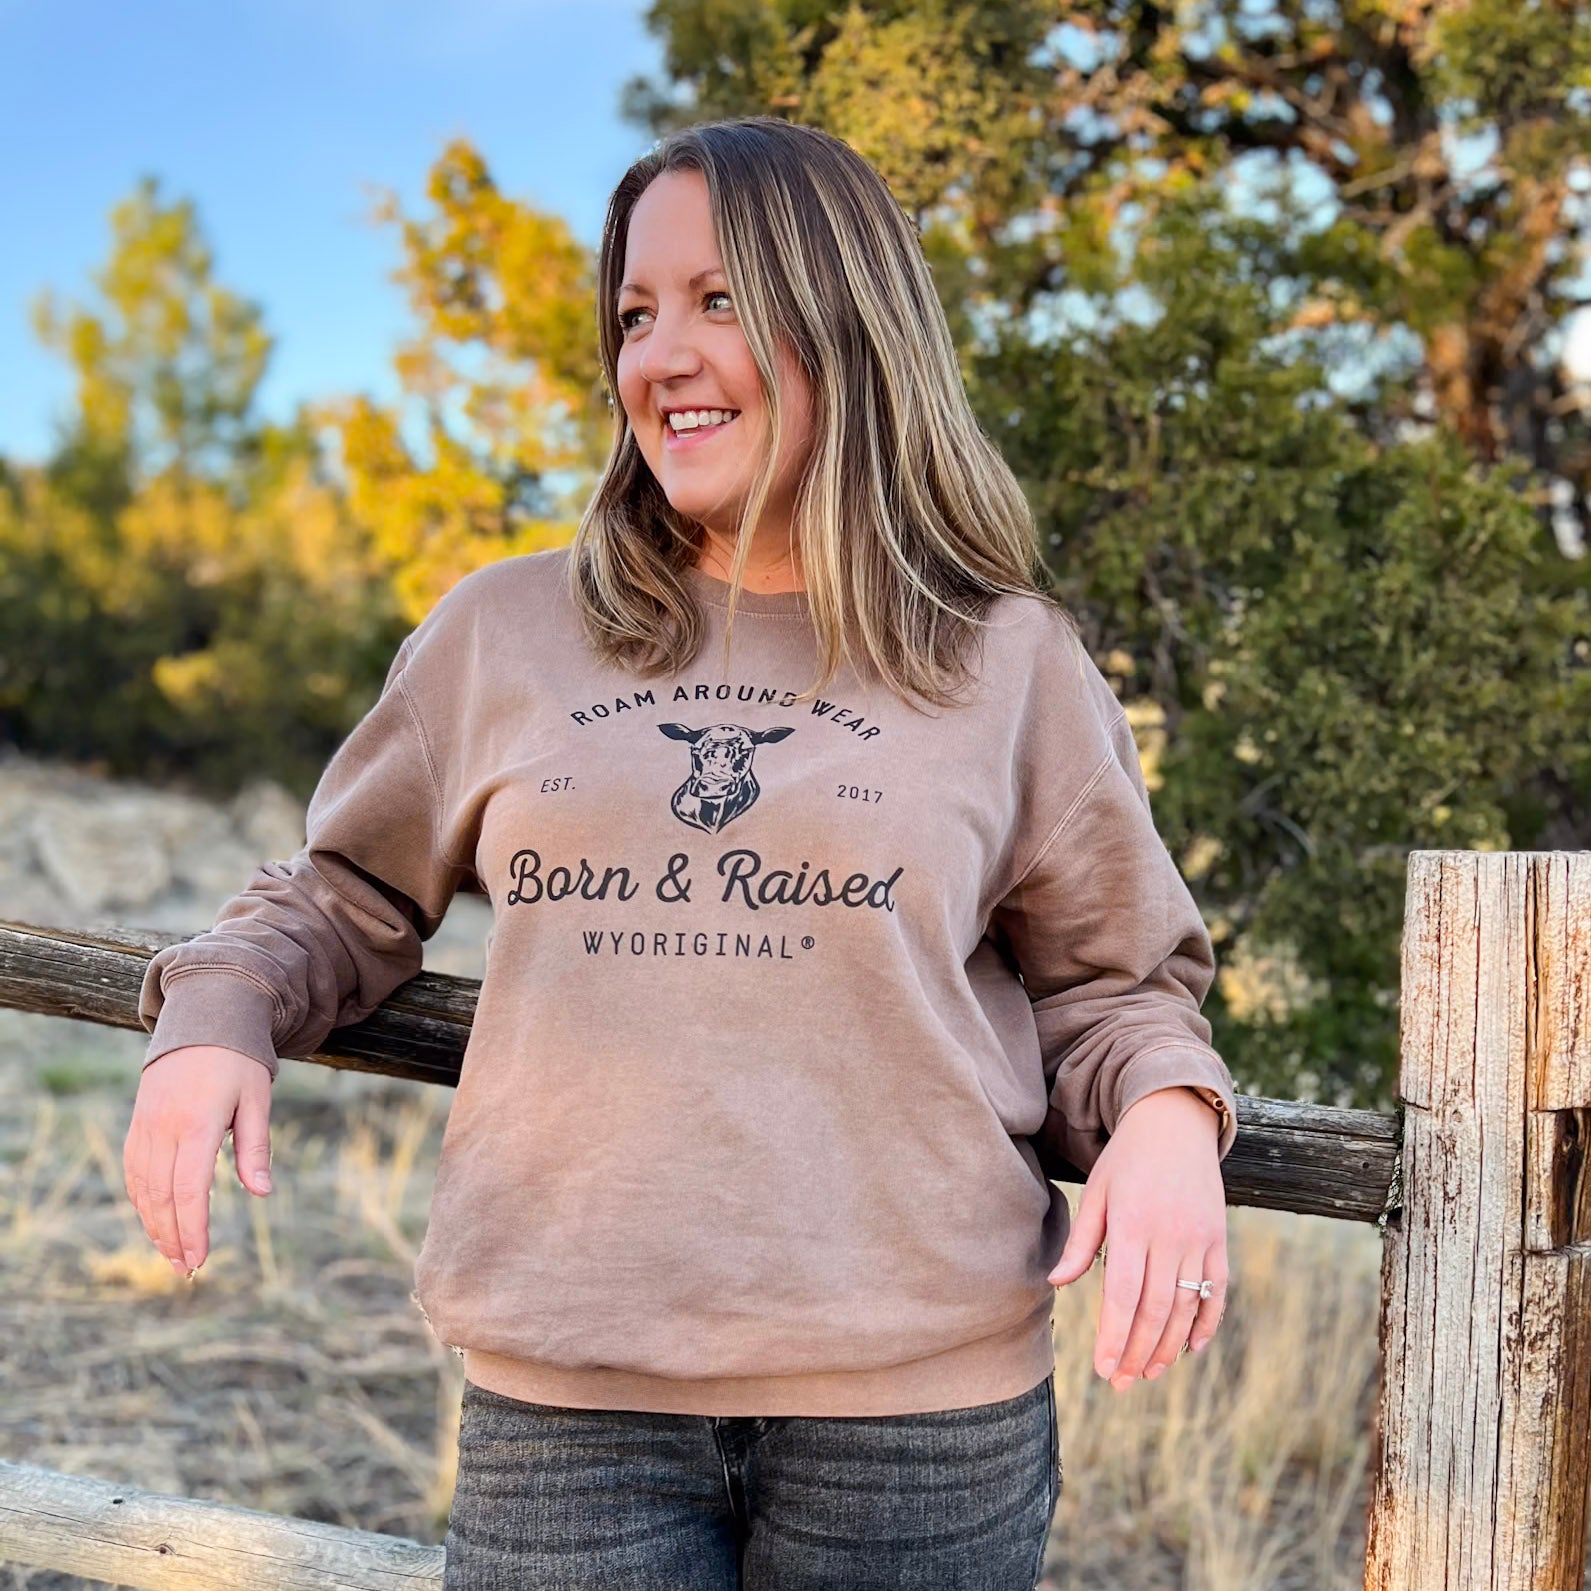 Wyoriginal sweatshirt. Angus cow sweatshirt. Wyoming sweatshirt. Roam Around Wear is a Wyoming t-shirt company based out of Gillette, Wyoing